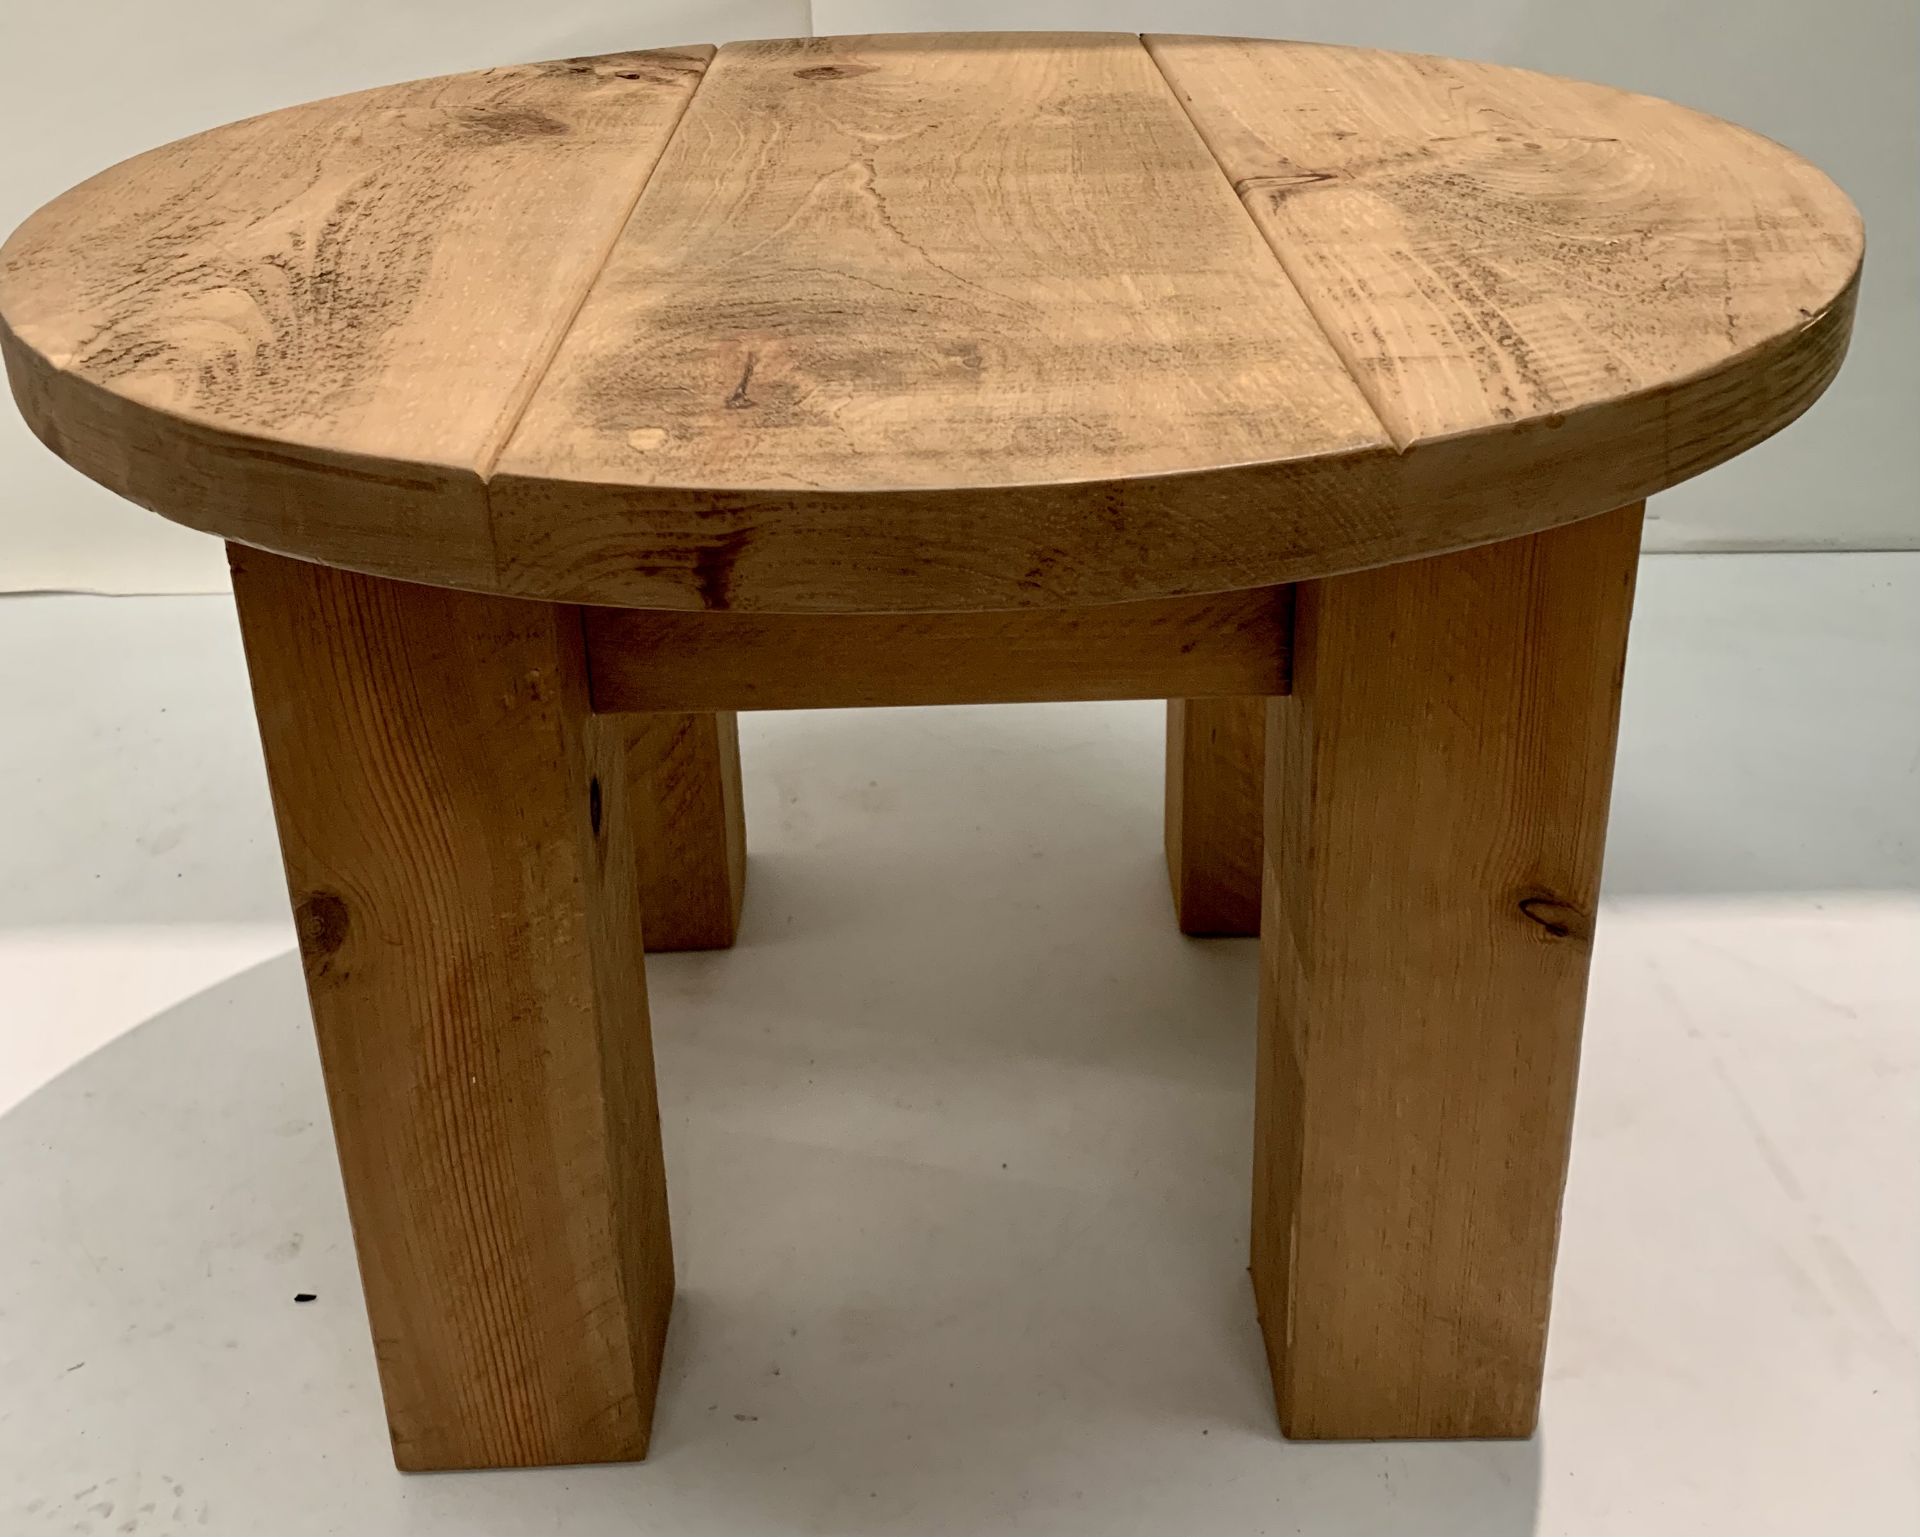 A 3 plank circular wooden coffee table 44cm high x 70cm diameter